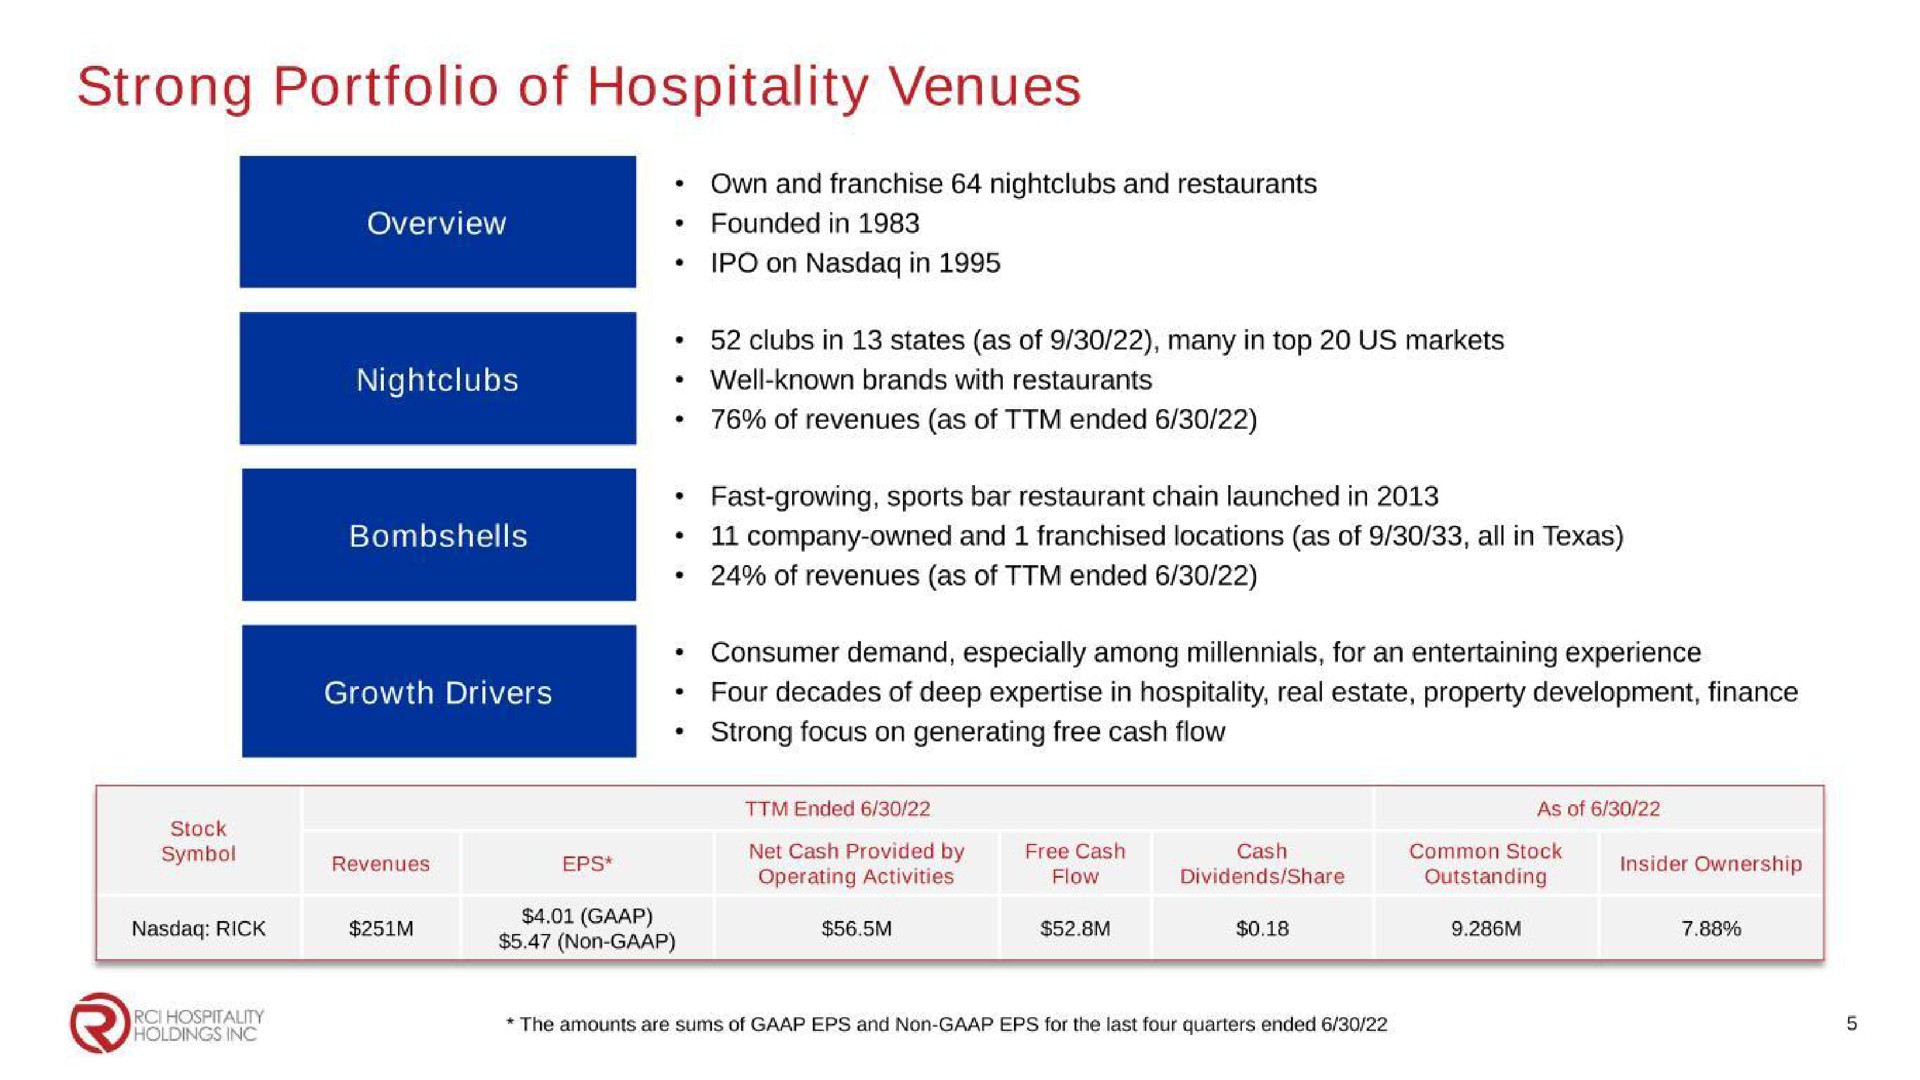 strong portfolio of hospitality venues | RCI Hospitality